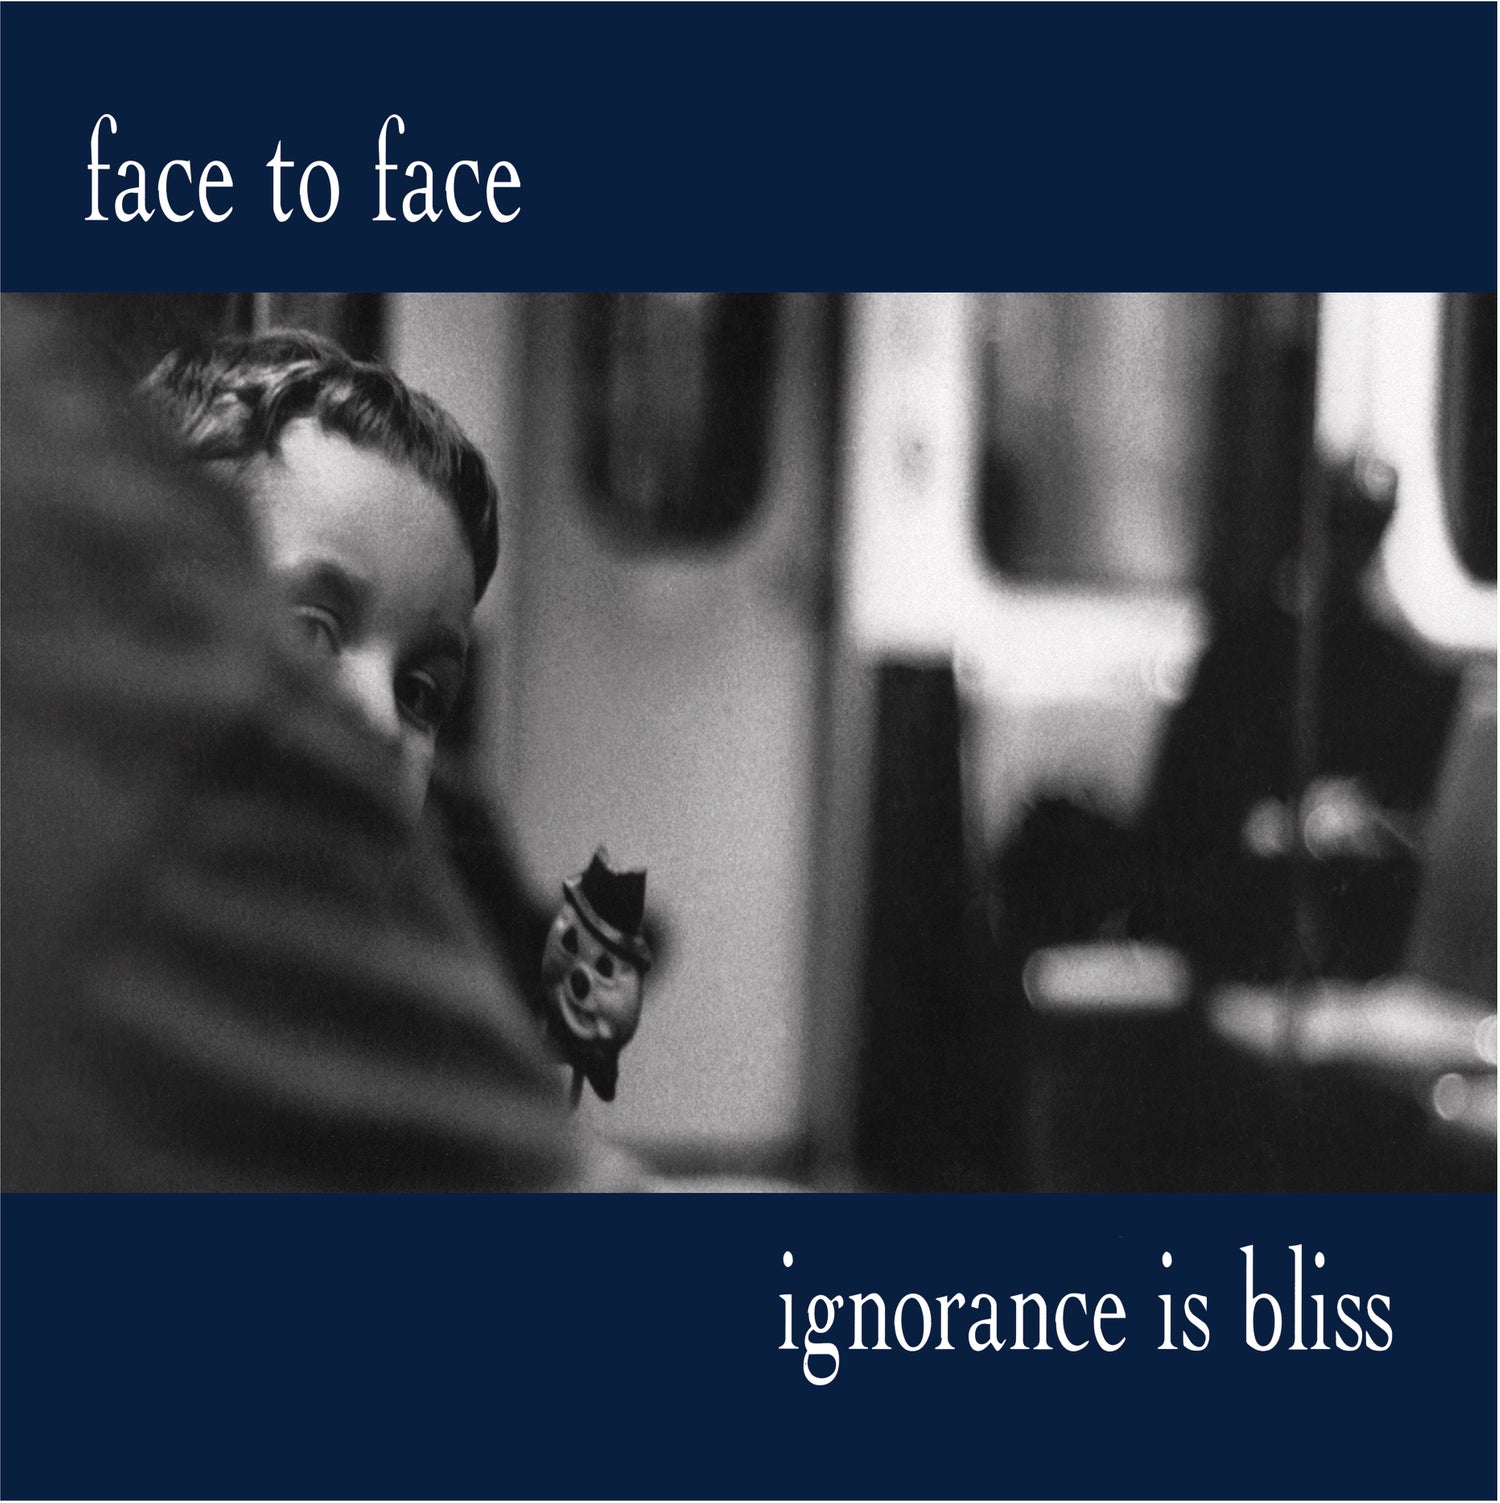 tårn Seminary tør Face to Face – Ignorance is Bliss vinyl reissue – chad blinman dot com